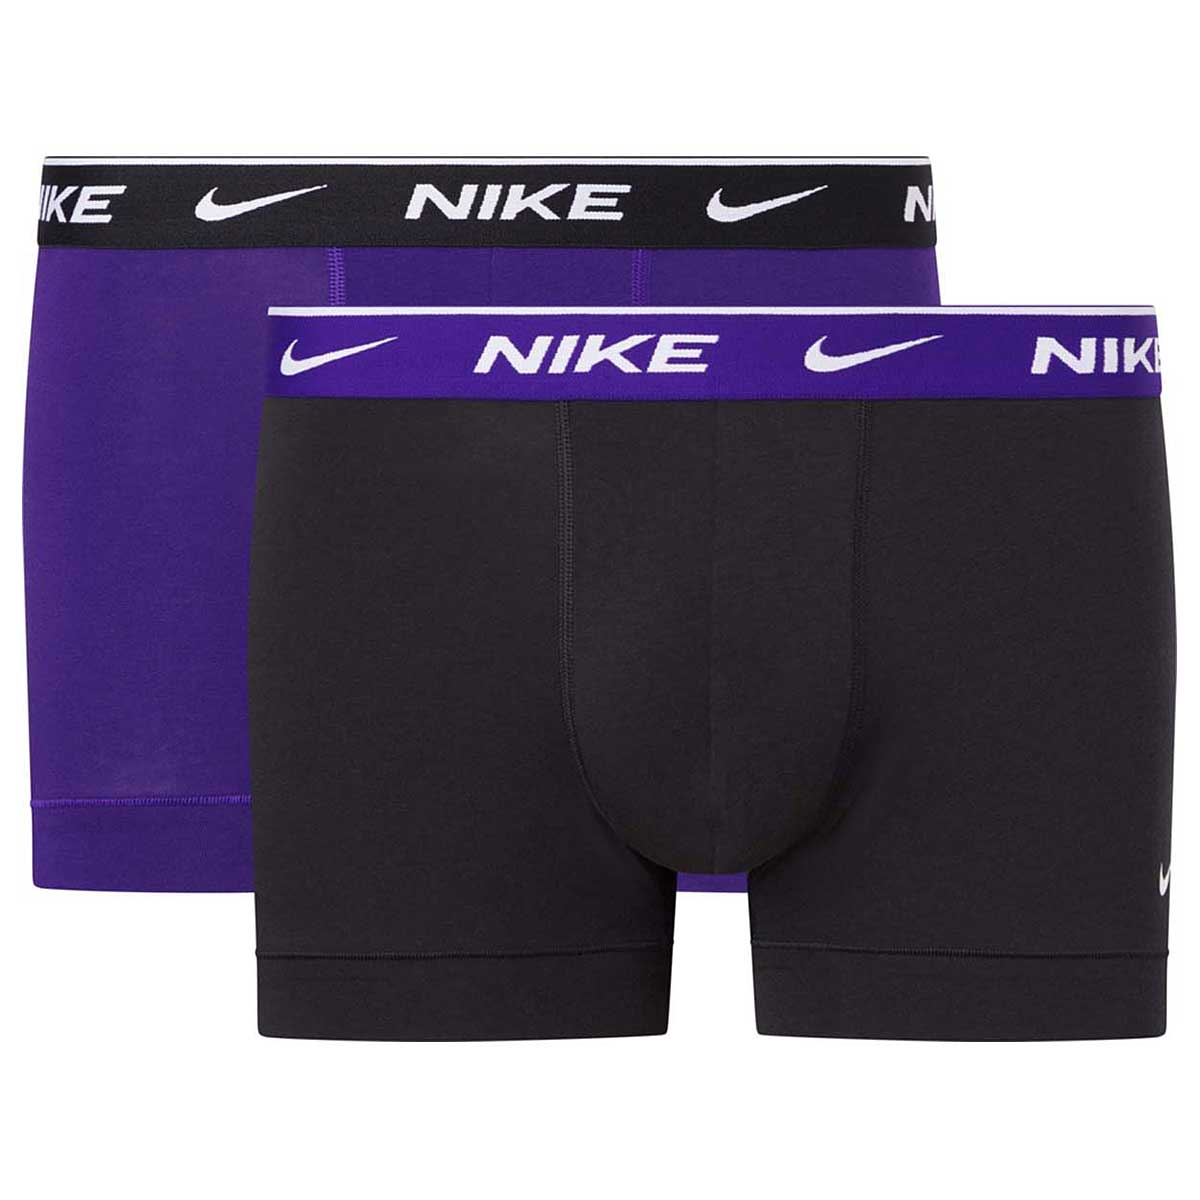 Nike Trunk 2Pk, Electro Purple/Blk-Electro Purple W